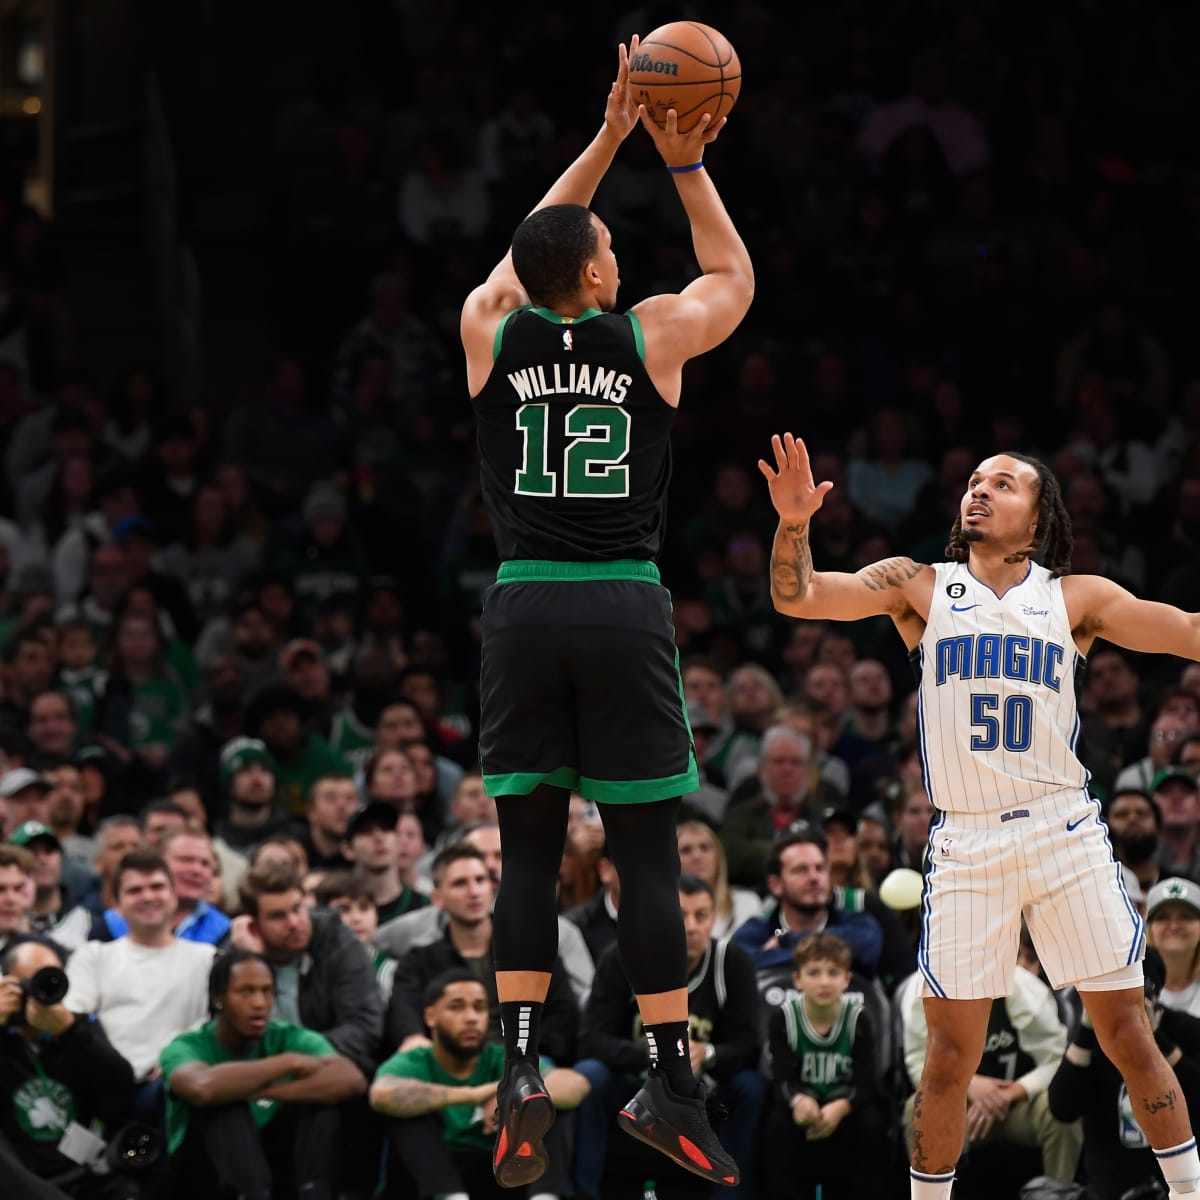 Celtics individuals have become focused team – Boston Herald